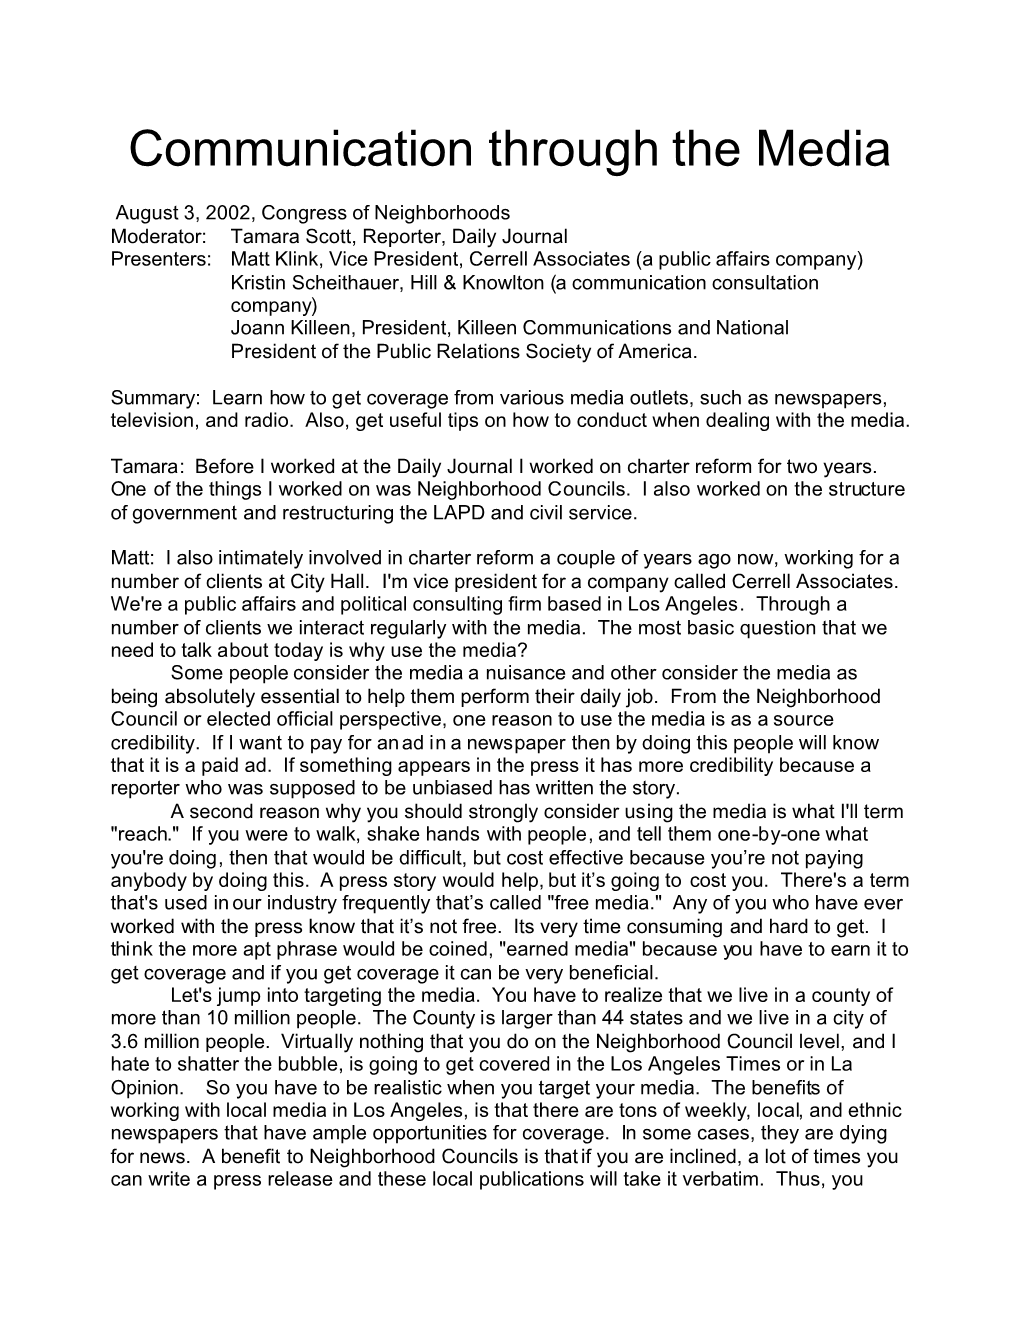 Communication Through the Media